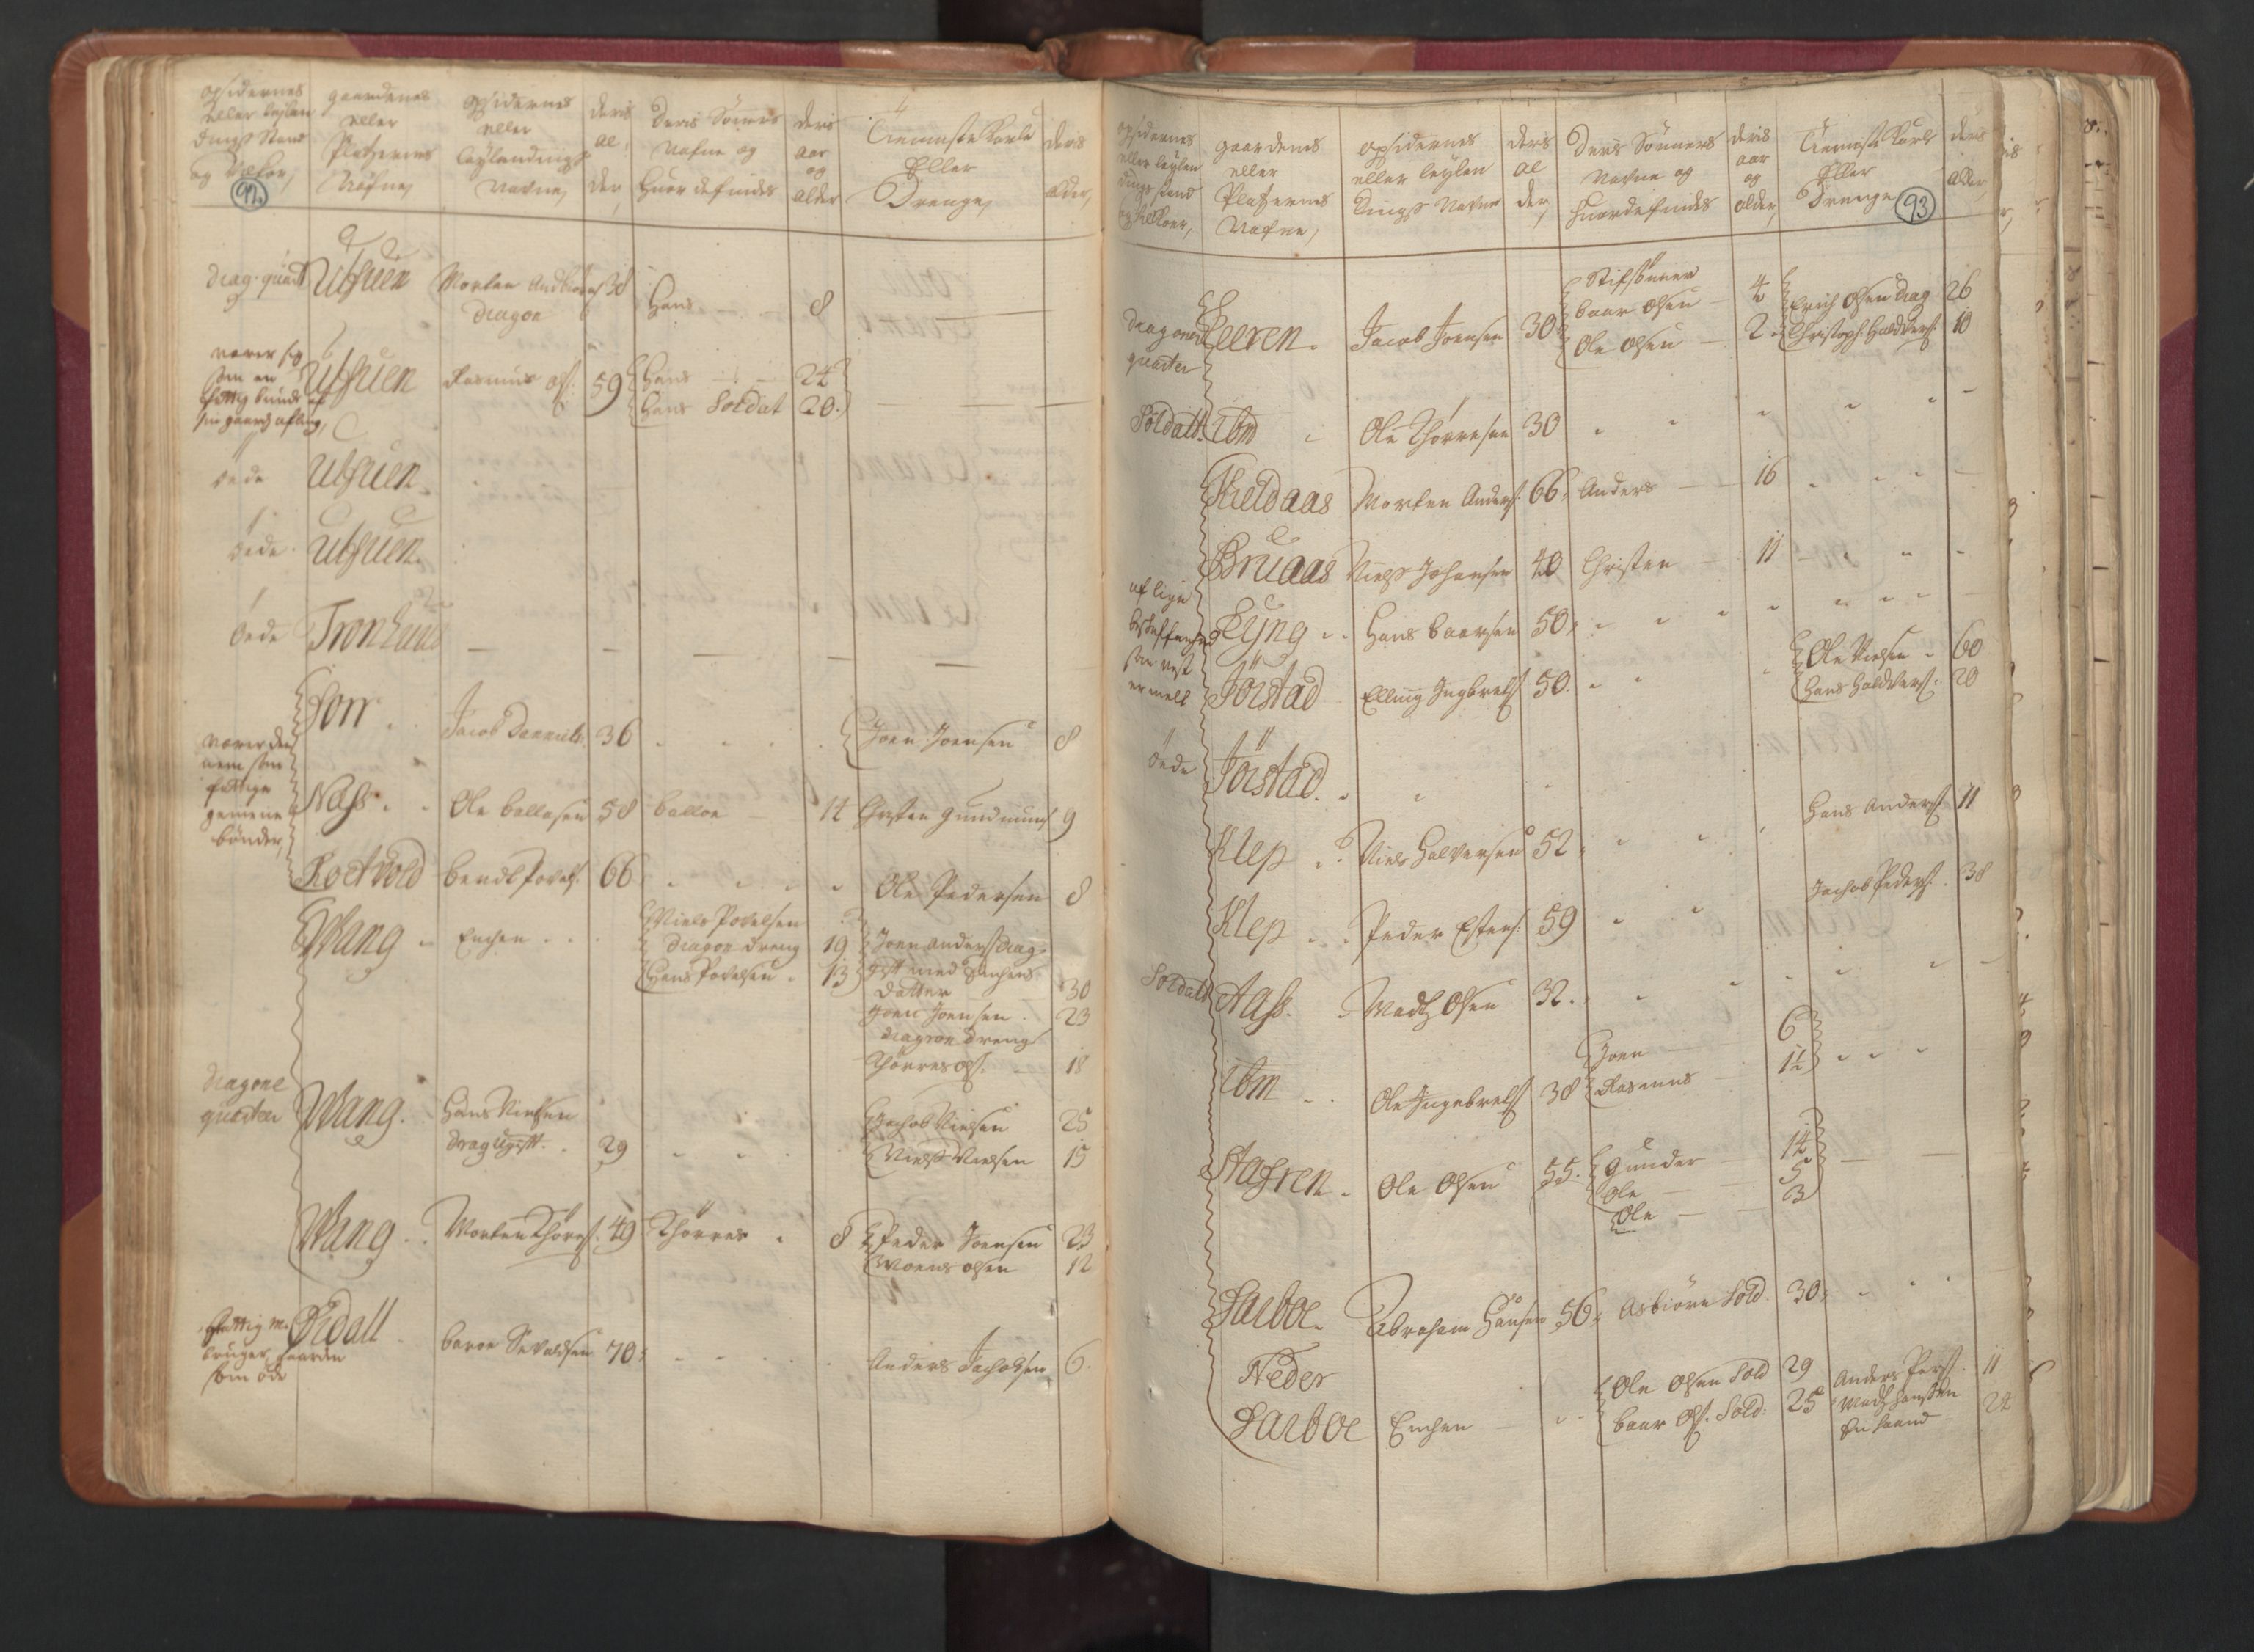 RA, Census (manntall) 1701, no. 15: Inderøy fogderi and Namdal fogderi, 1701, p. 92-93